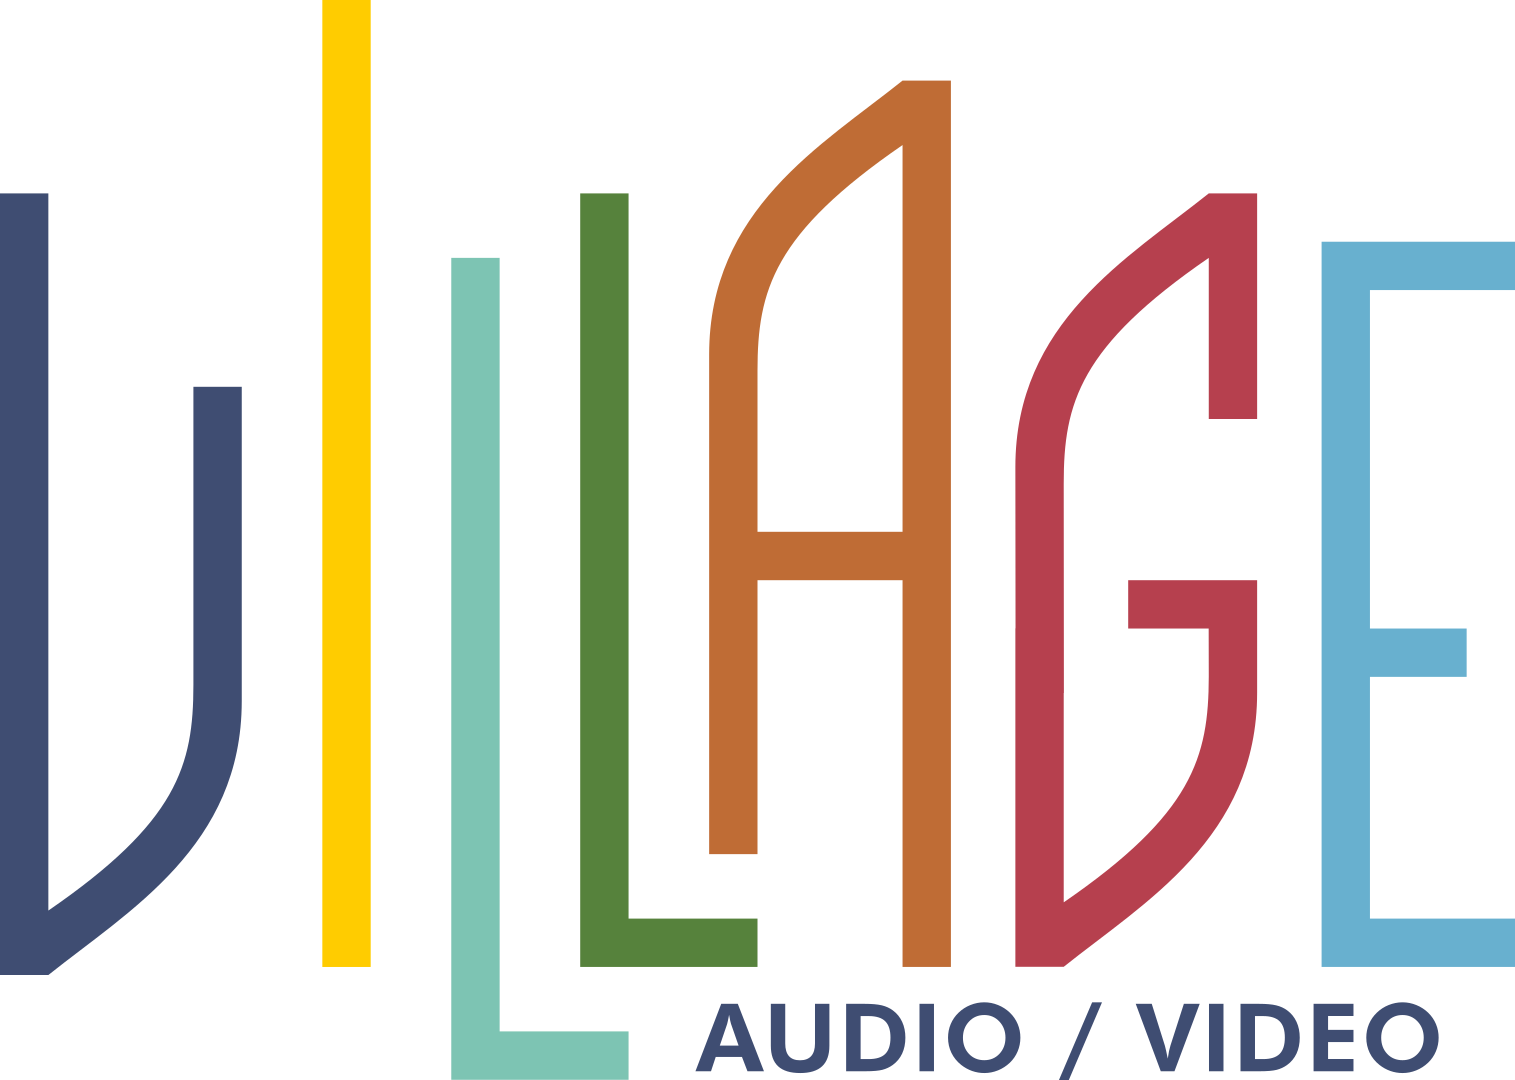 Village Audio/Video